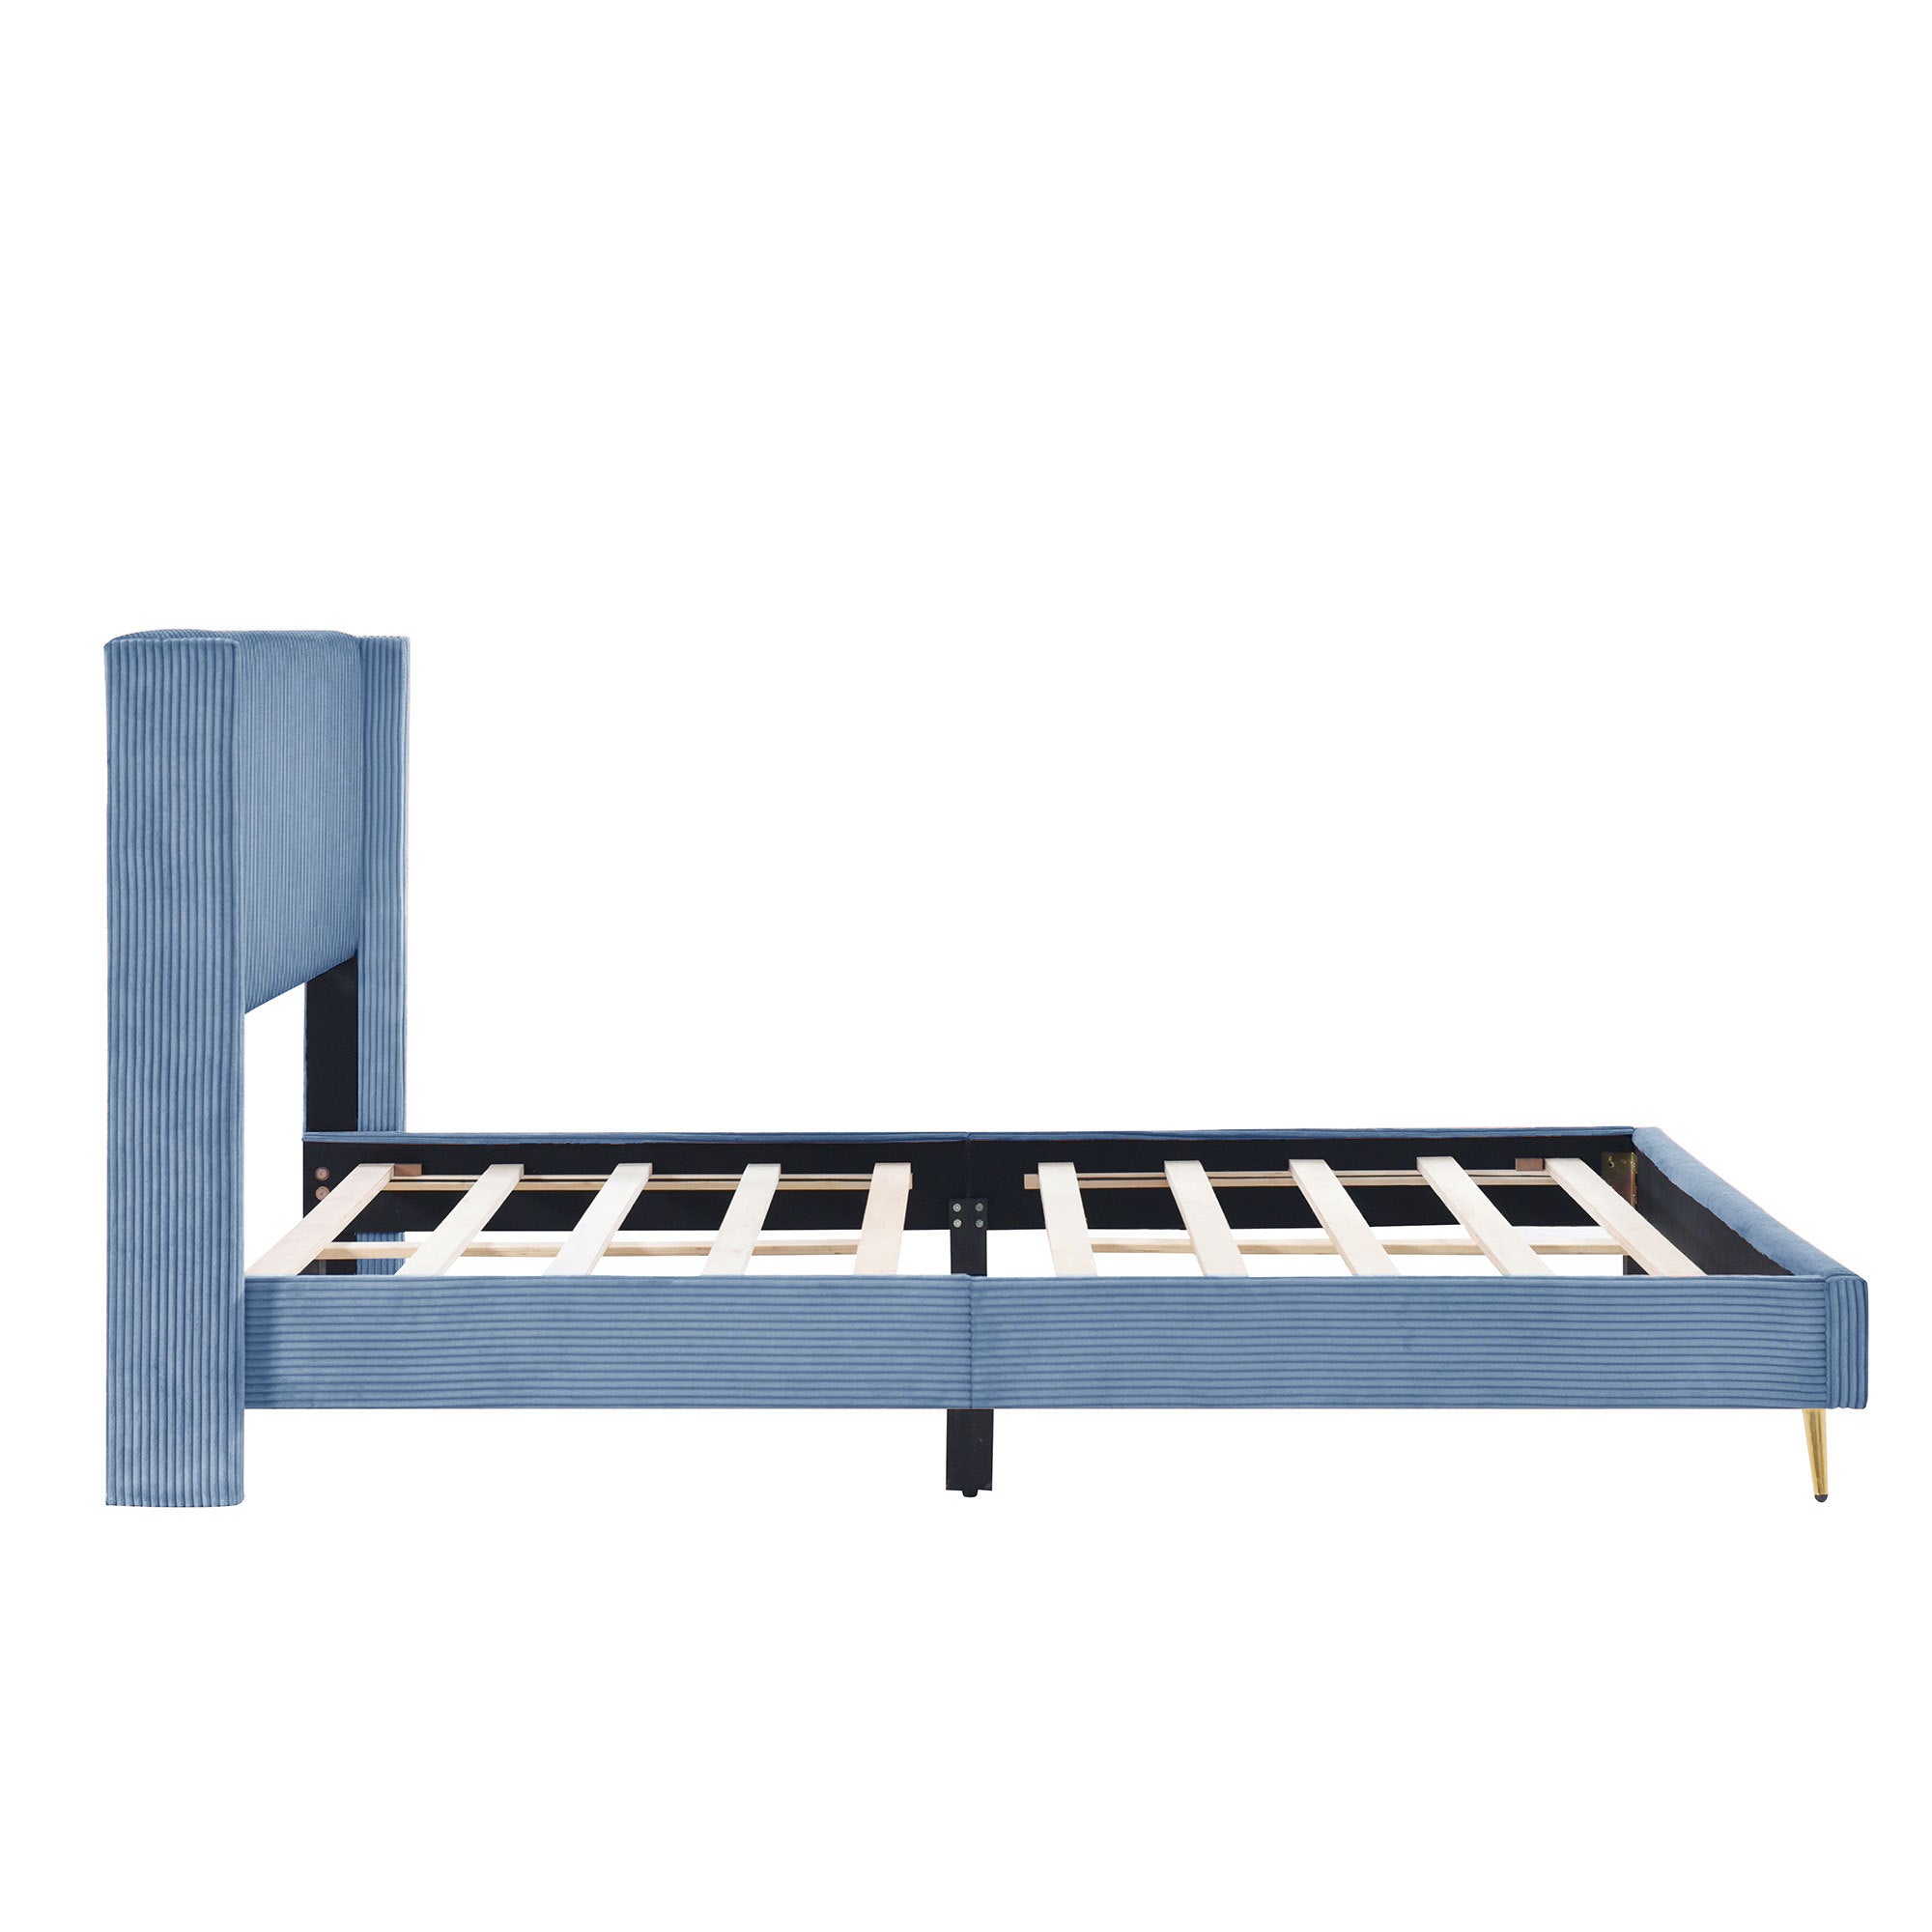 Queen Size Corduroy Platform Bed with Metal Legs, Blue blue-corduroy